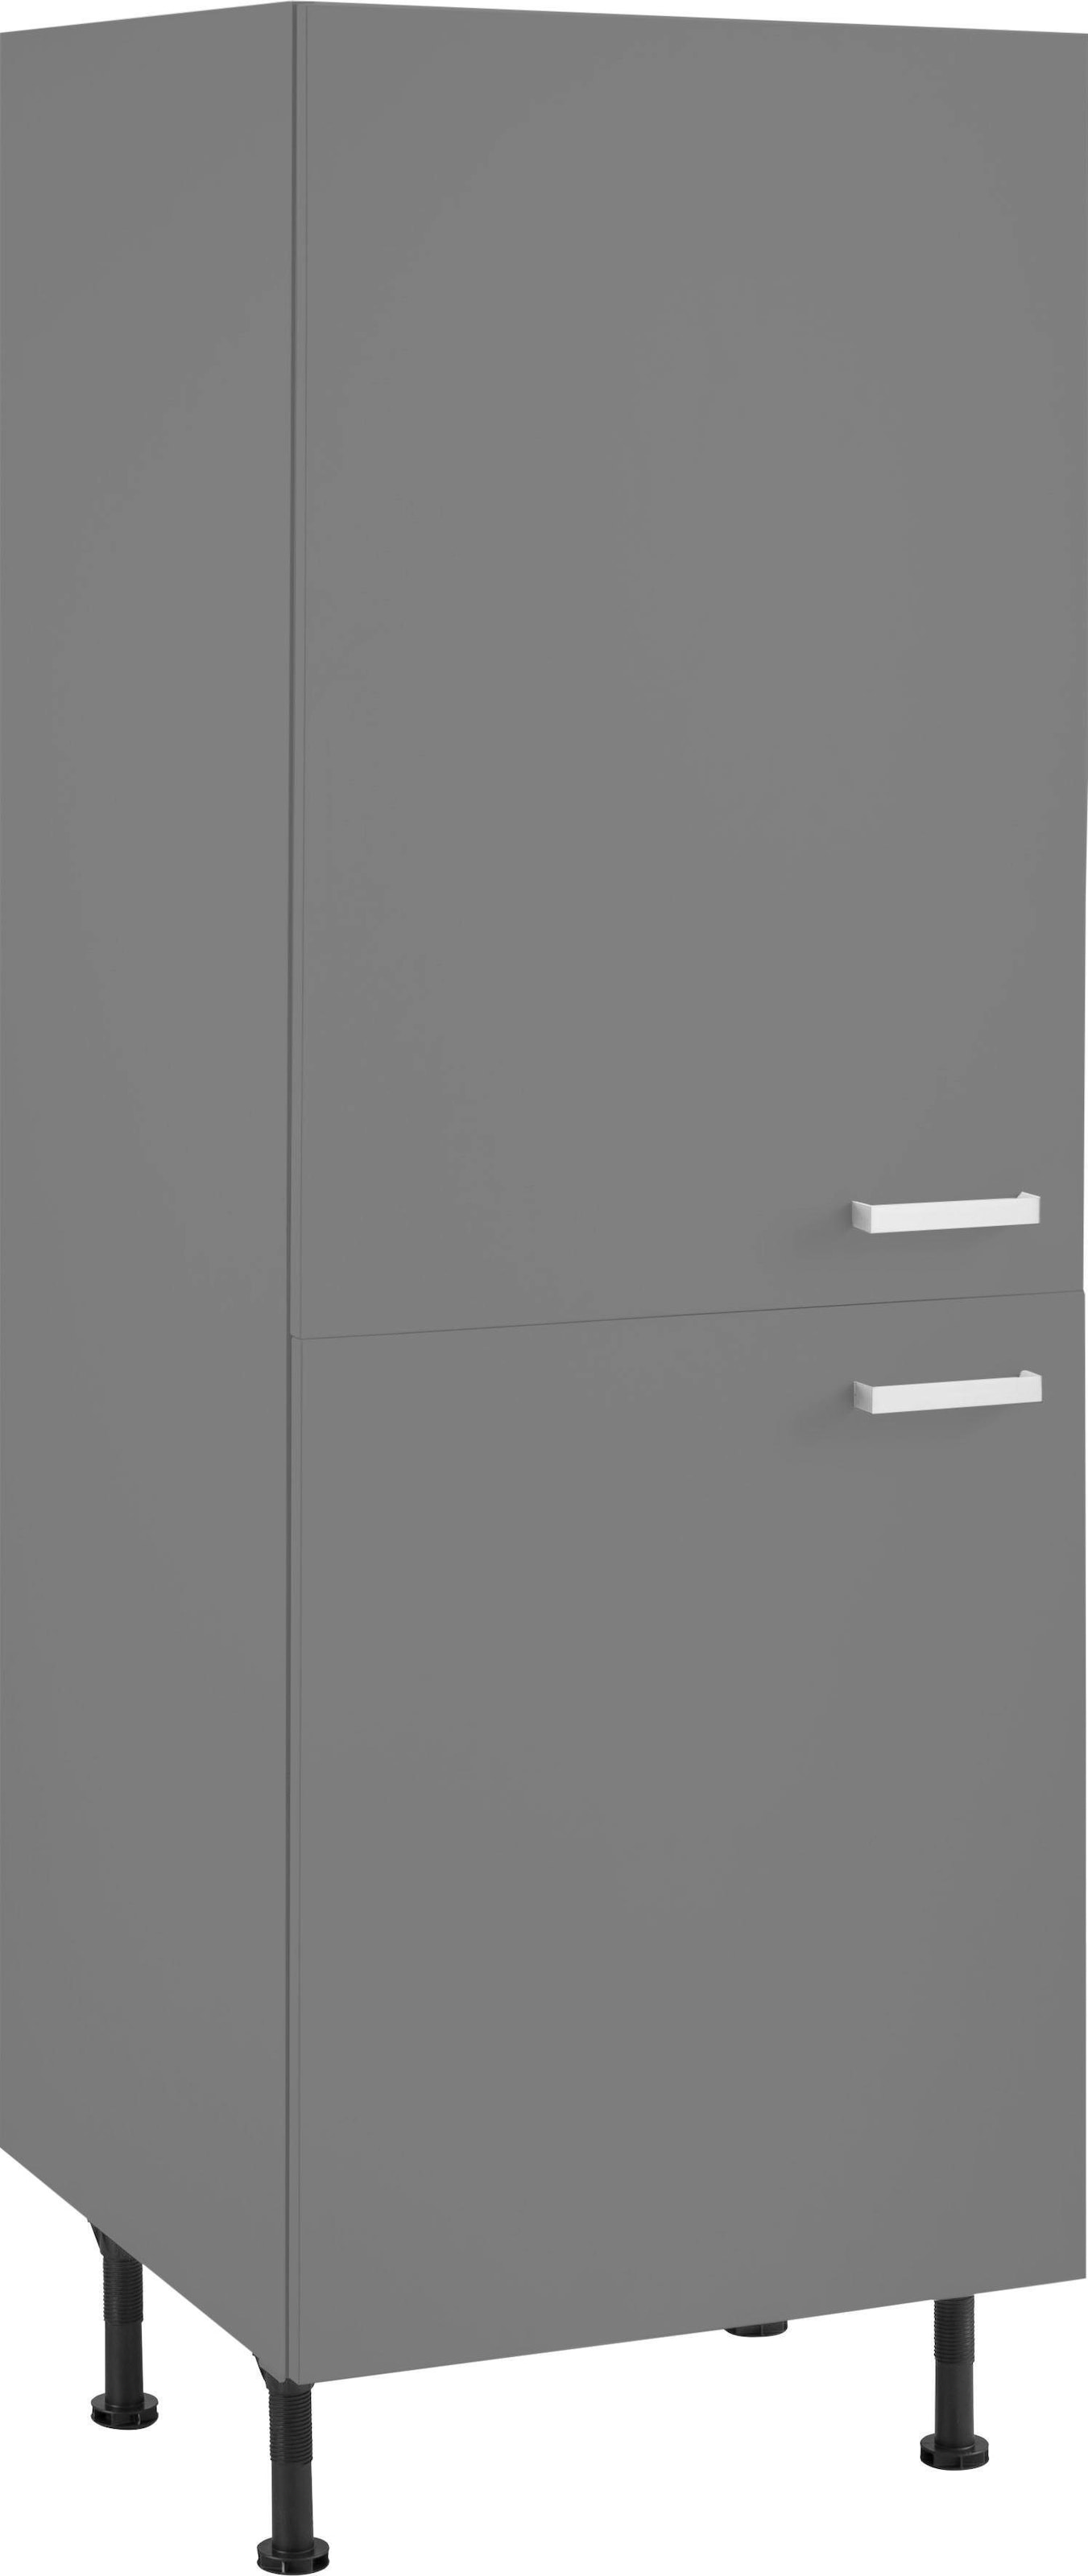 OPTIFIT Kühlumbauschrank »Parma«, Breite 60 cm